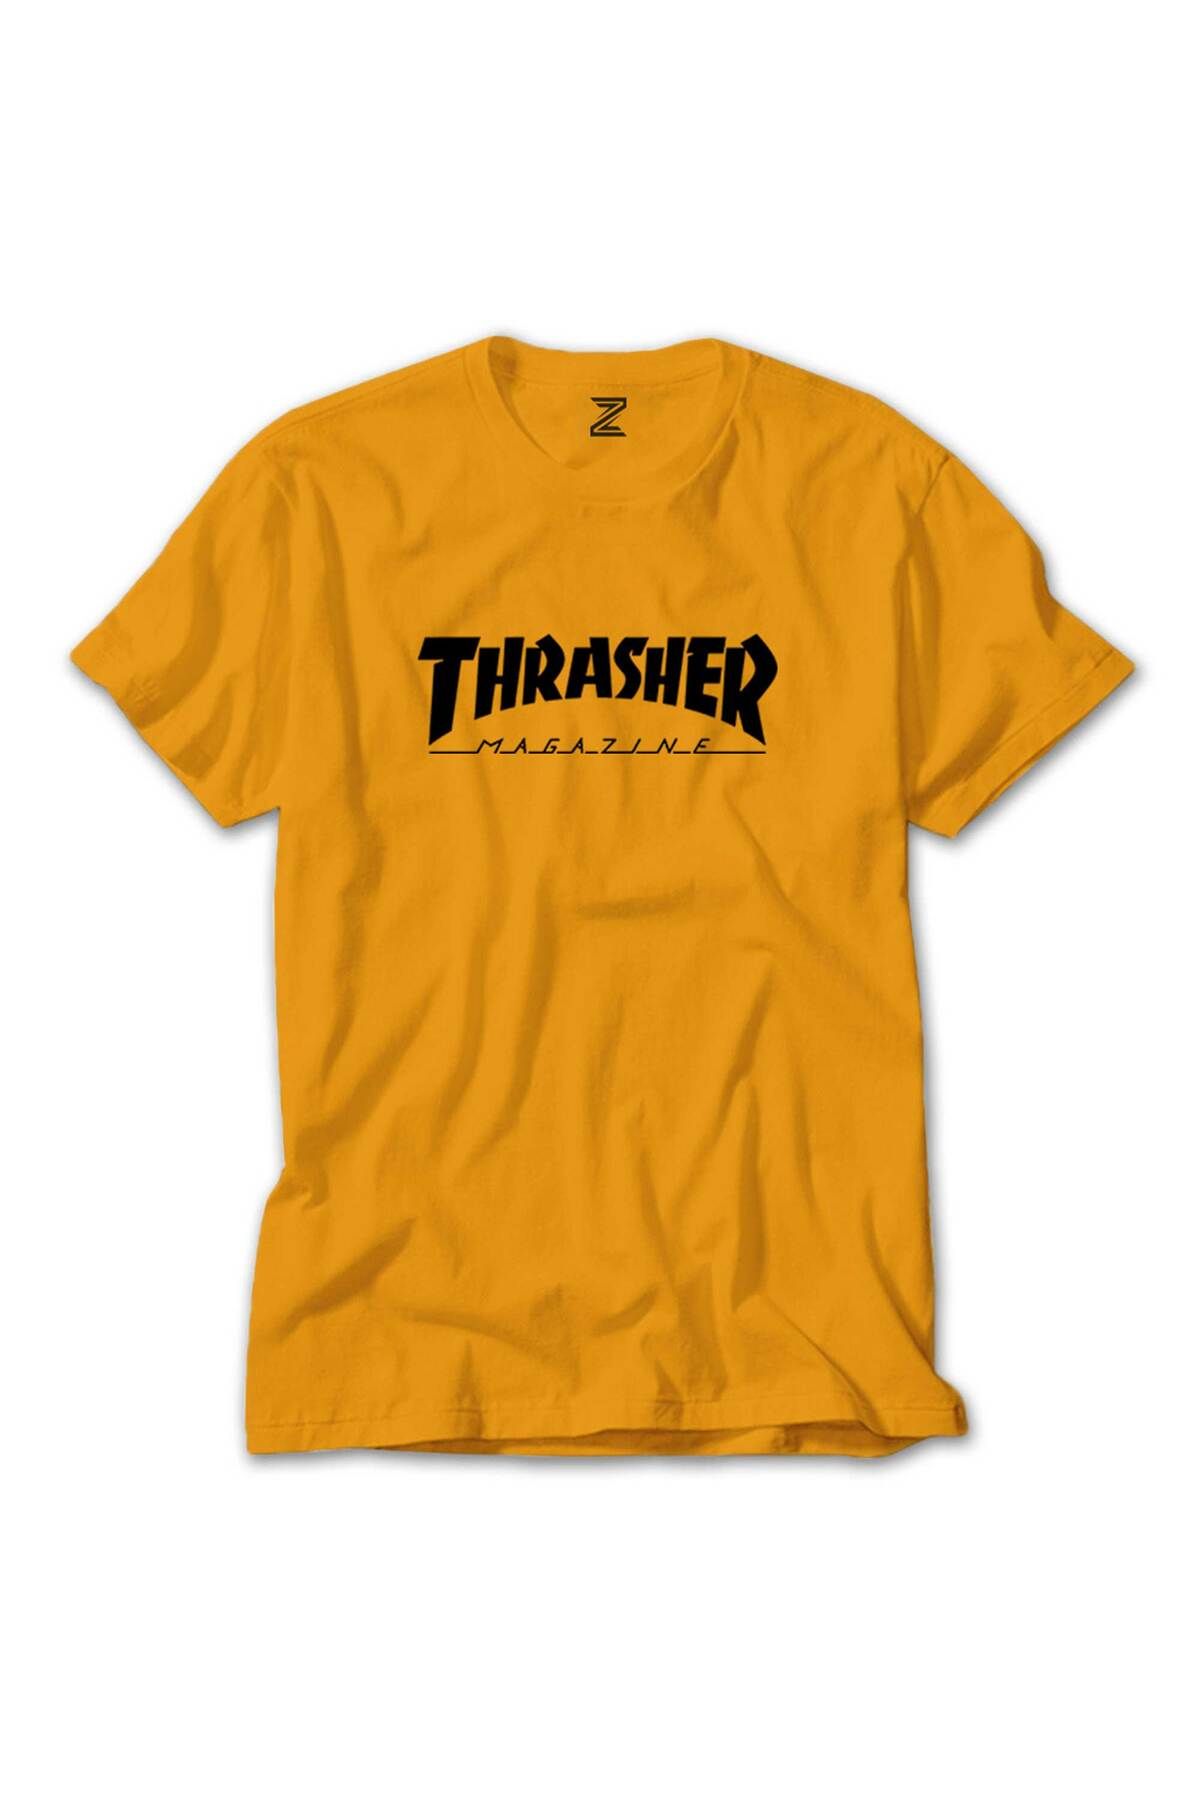 Z zepplin Thrasher Magazine Classic Sarı Tişört